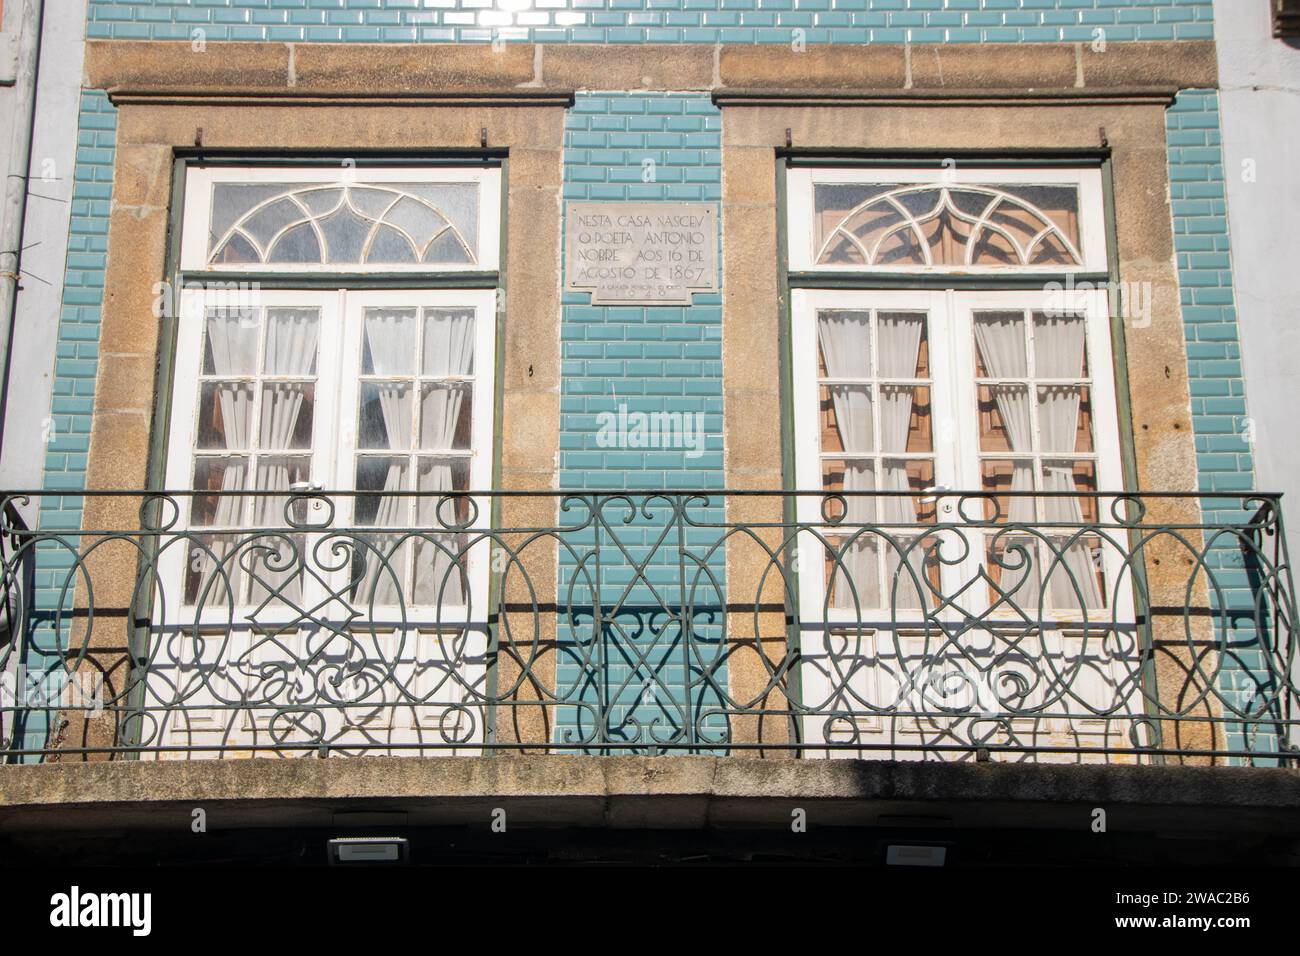 Façade typique de palais, carrelée d'azulejos, dans le quartier de Ribeira à Porto au Portugal Banque D'Images